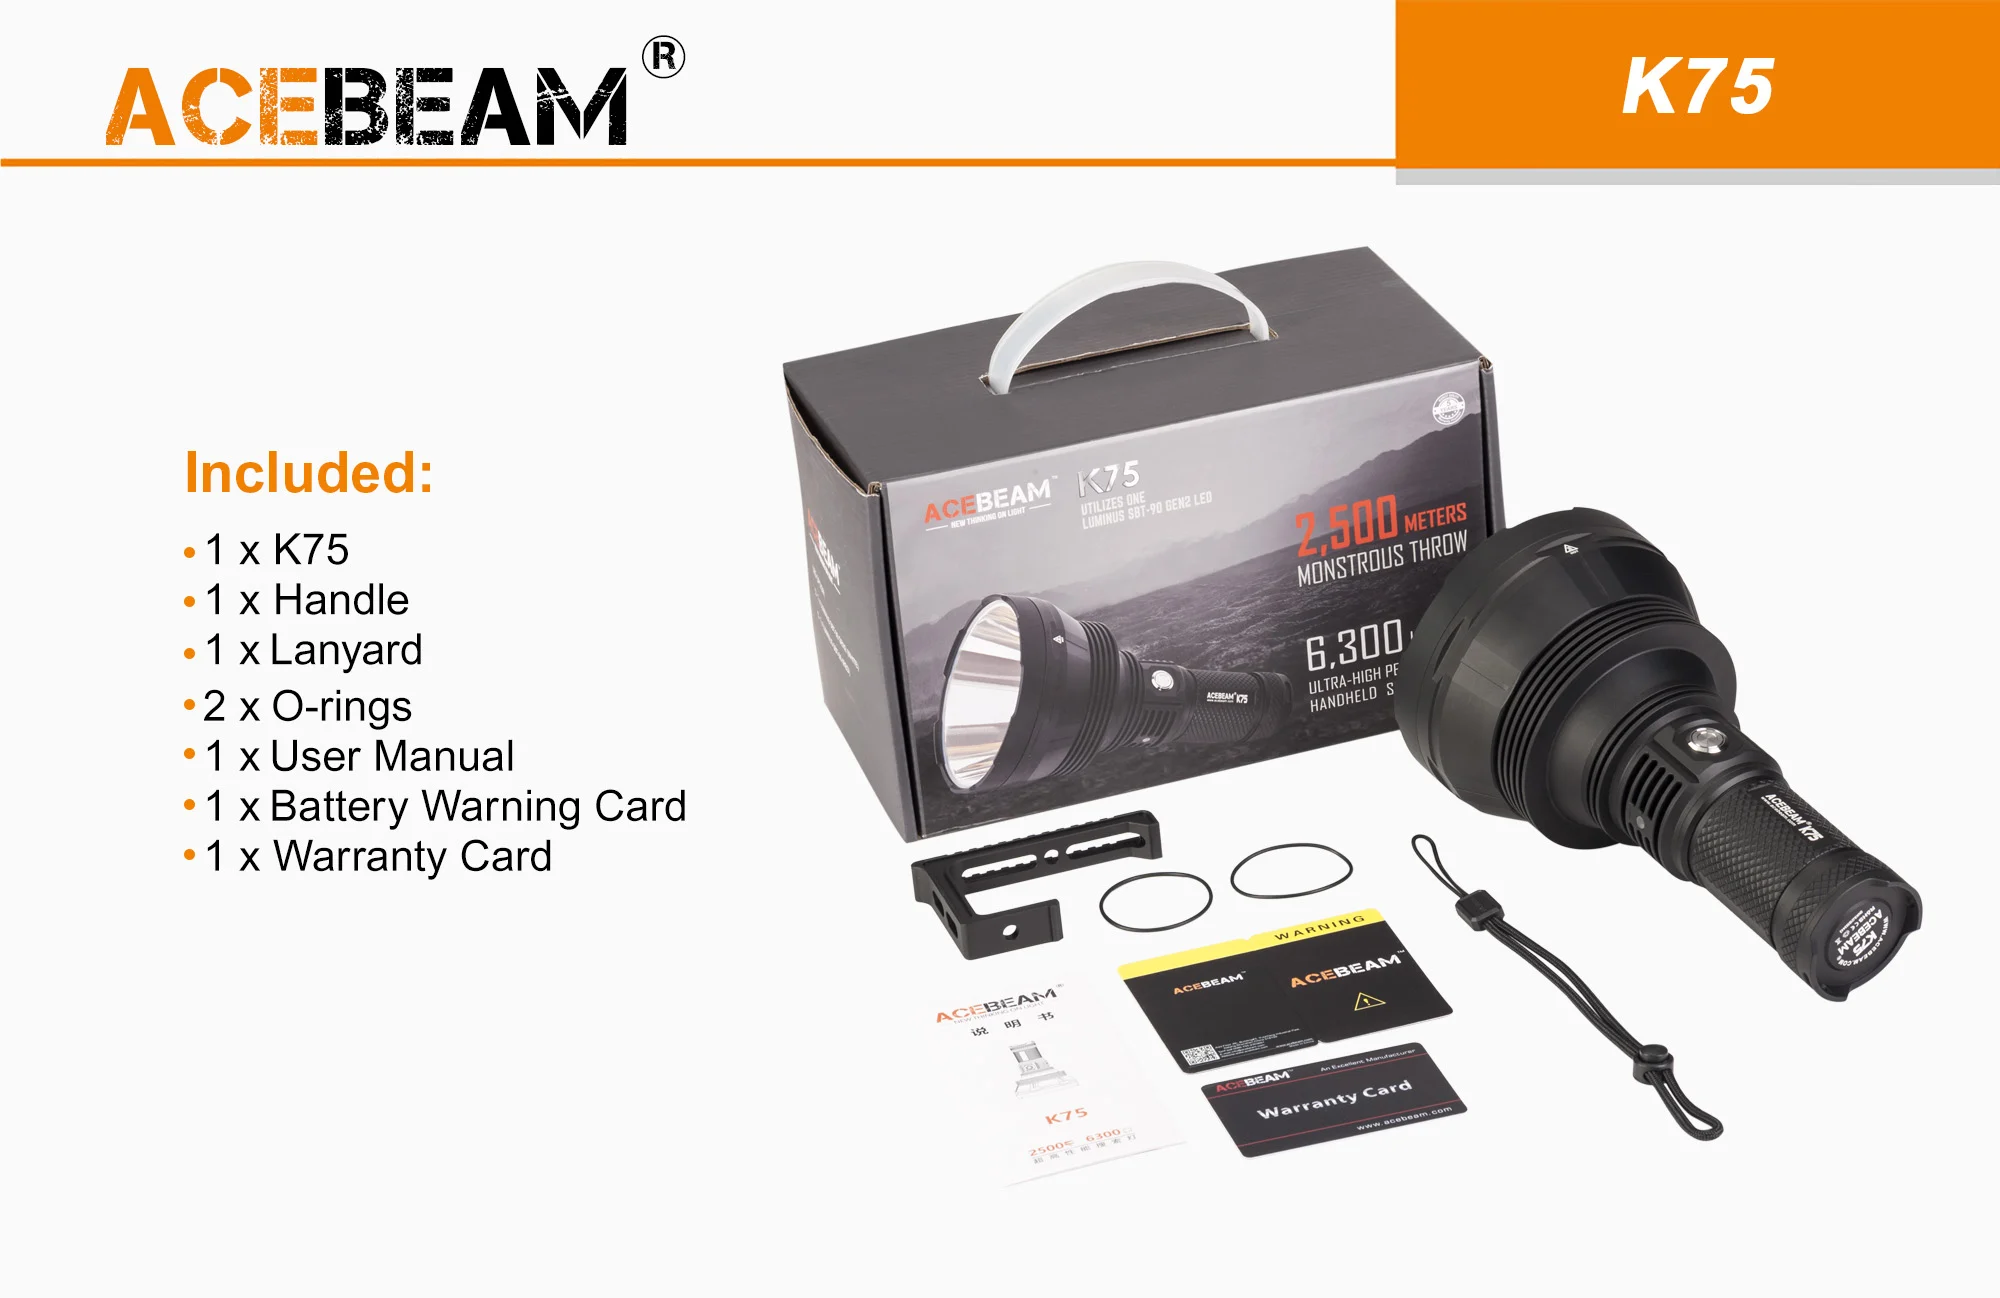 Acebeam K75 1xLUMINUS SBT-90-GEN2 LED 6300 lumens  High Power Search Lights